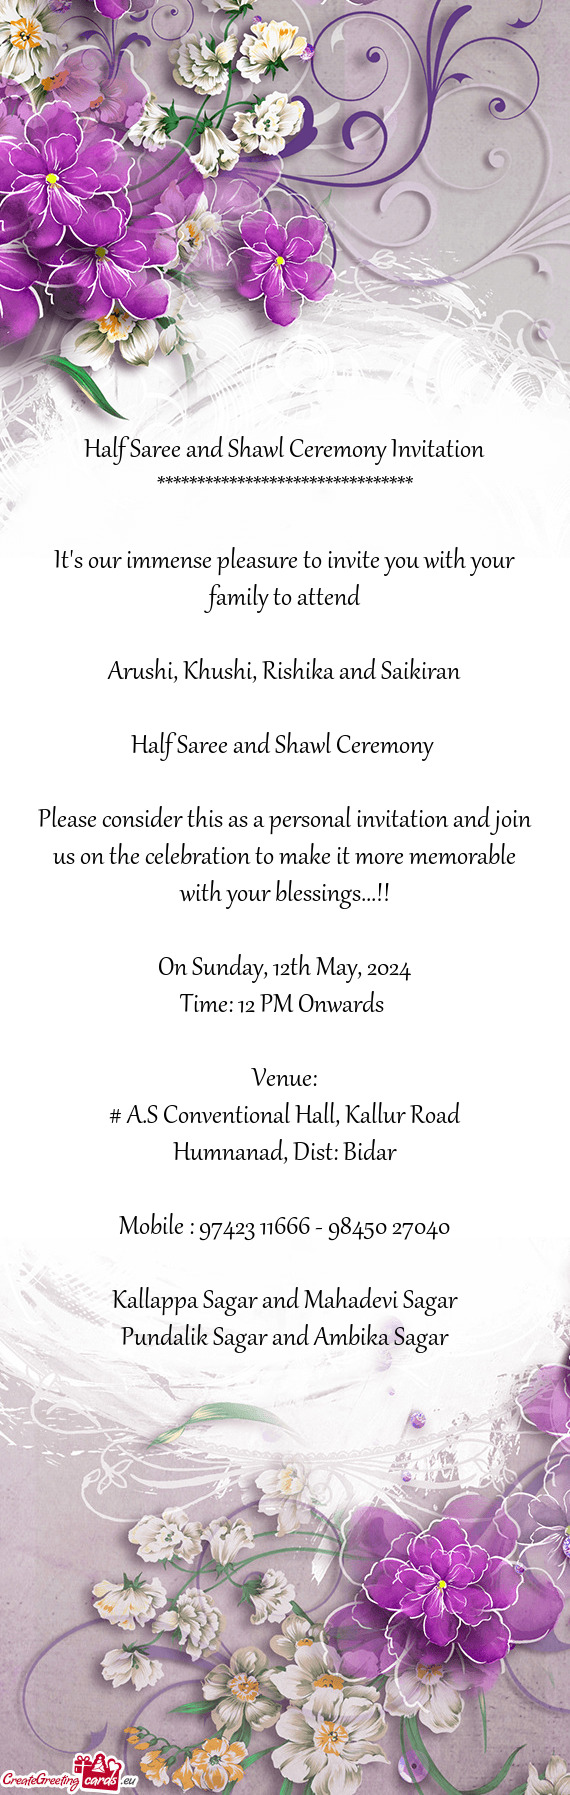 Half Saree and Shawl Ceremony Invitation